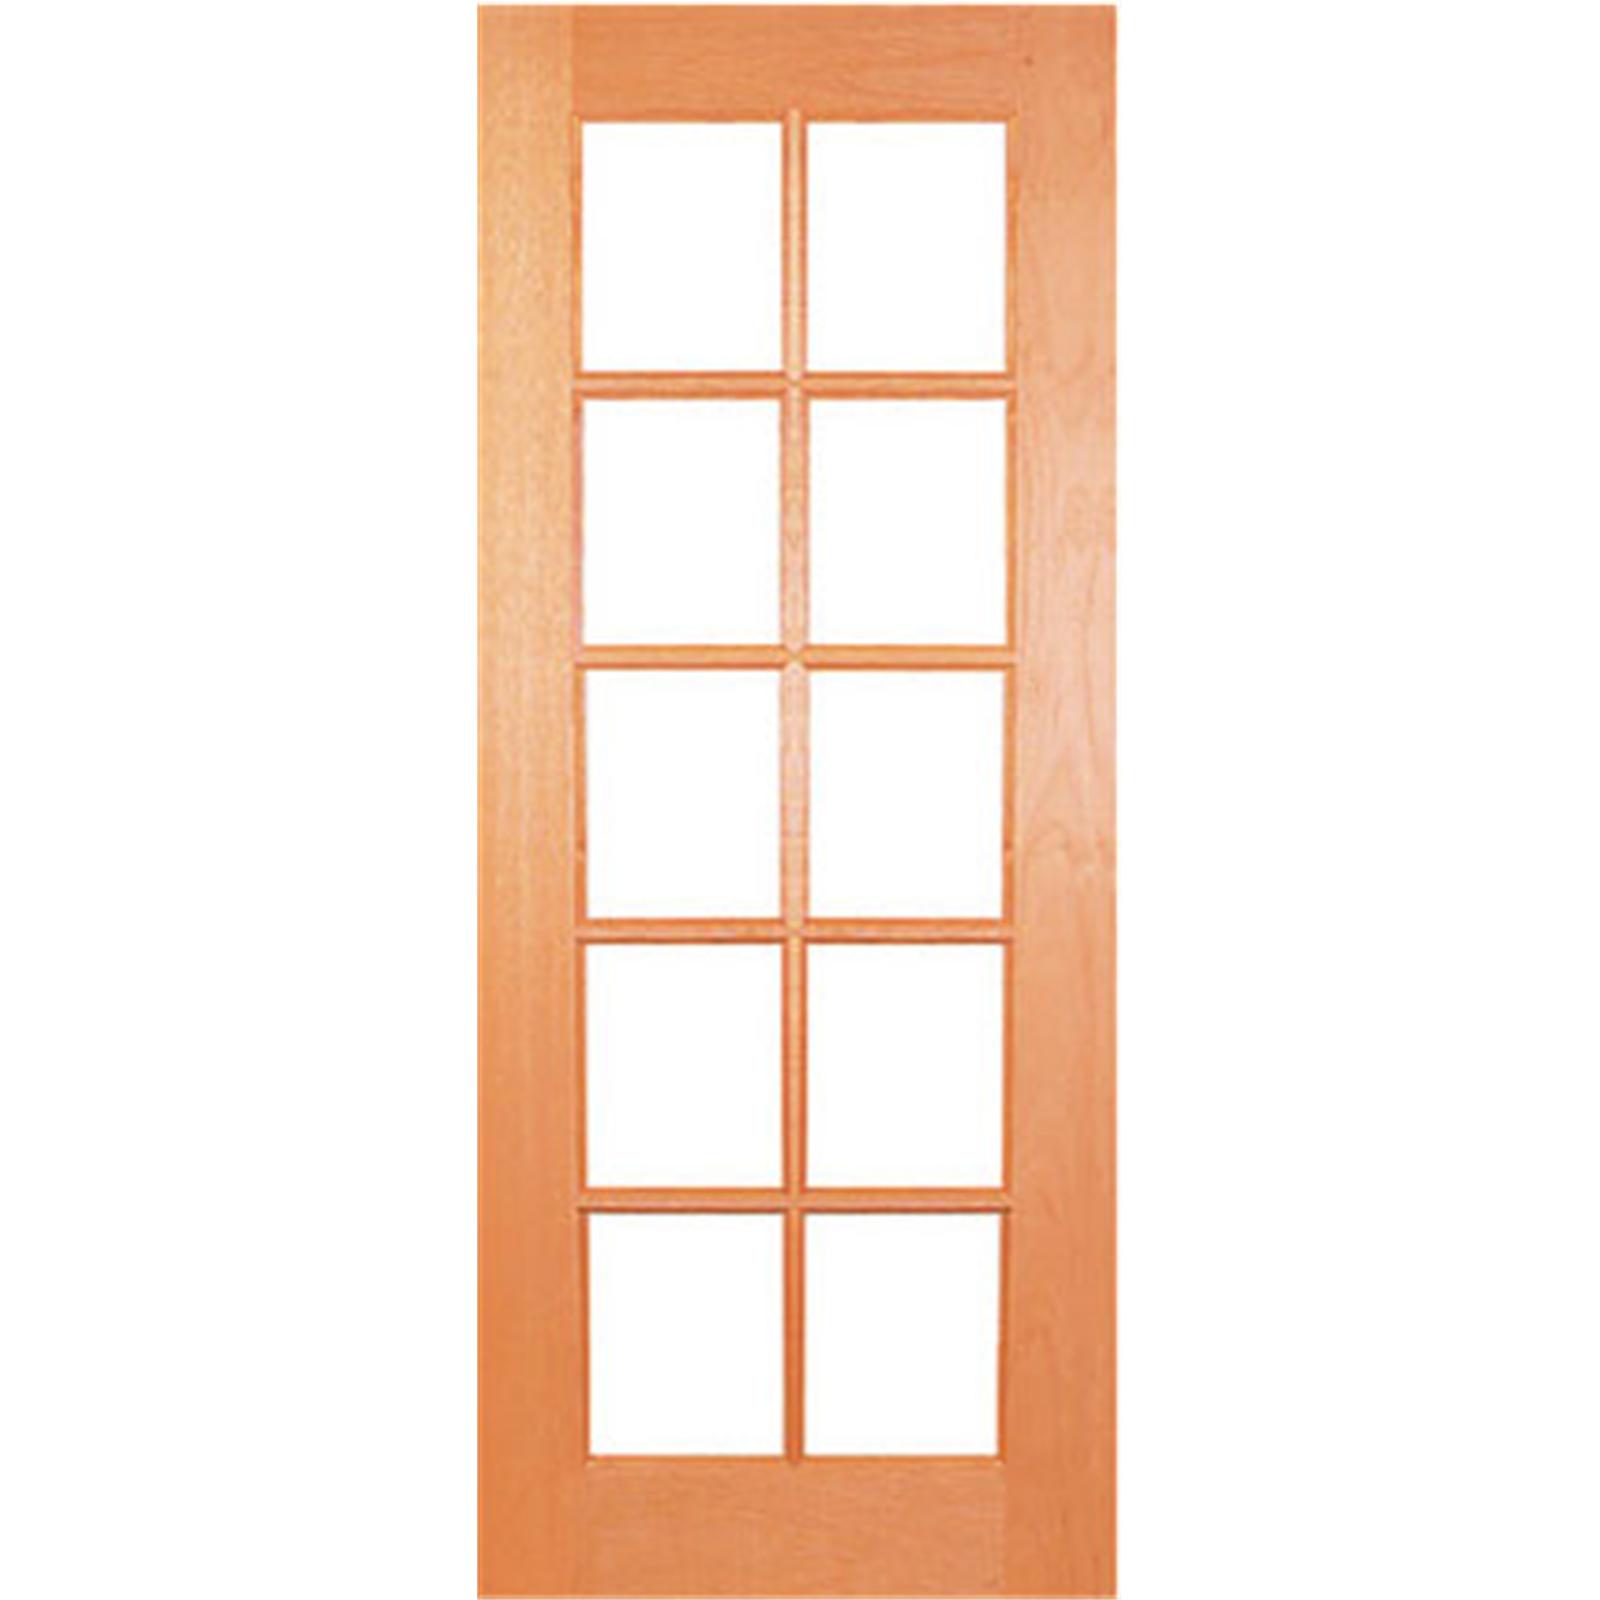 Woodcraft Doors 2040 x 820 x 40mm Flash Bevelled Safety Glass Entrance Door